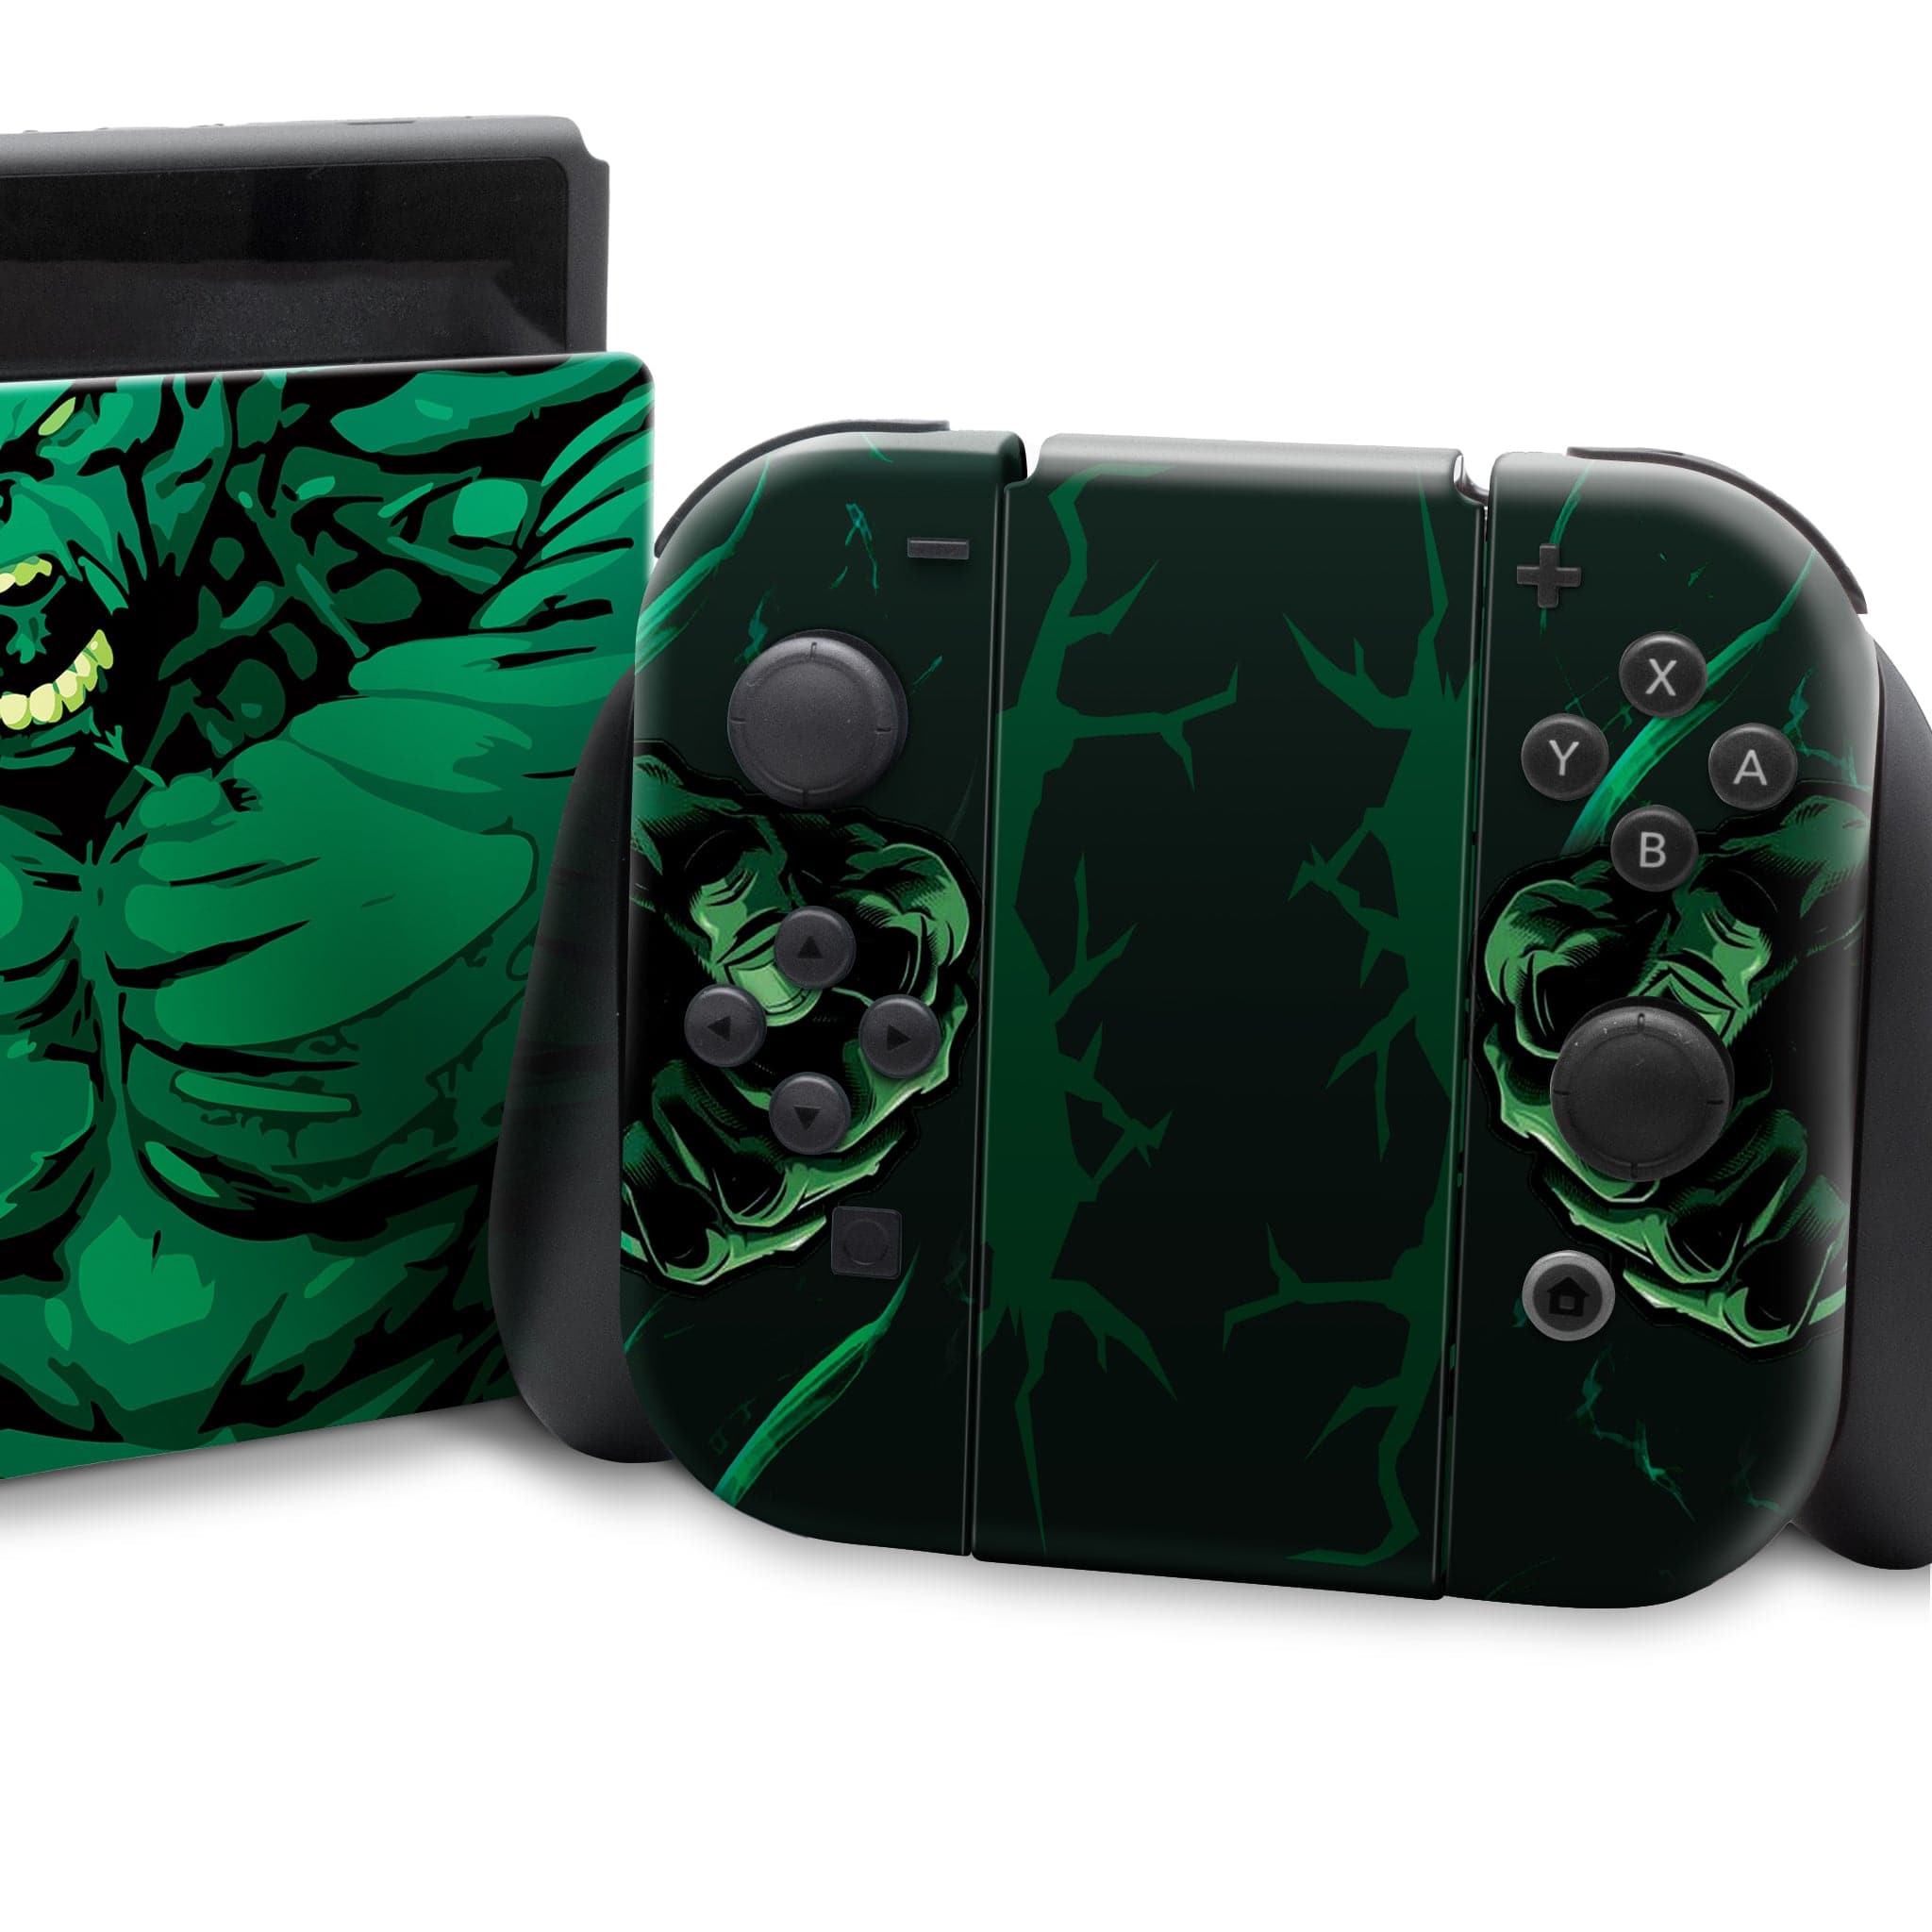 Hulk Nintendo Switch Full Set by Nintendo: My Nintendo